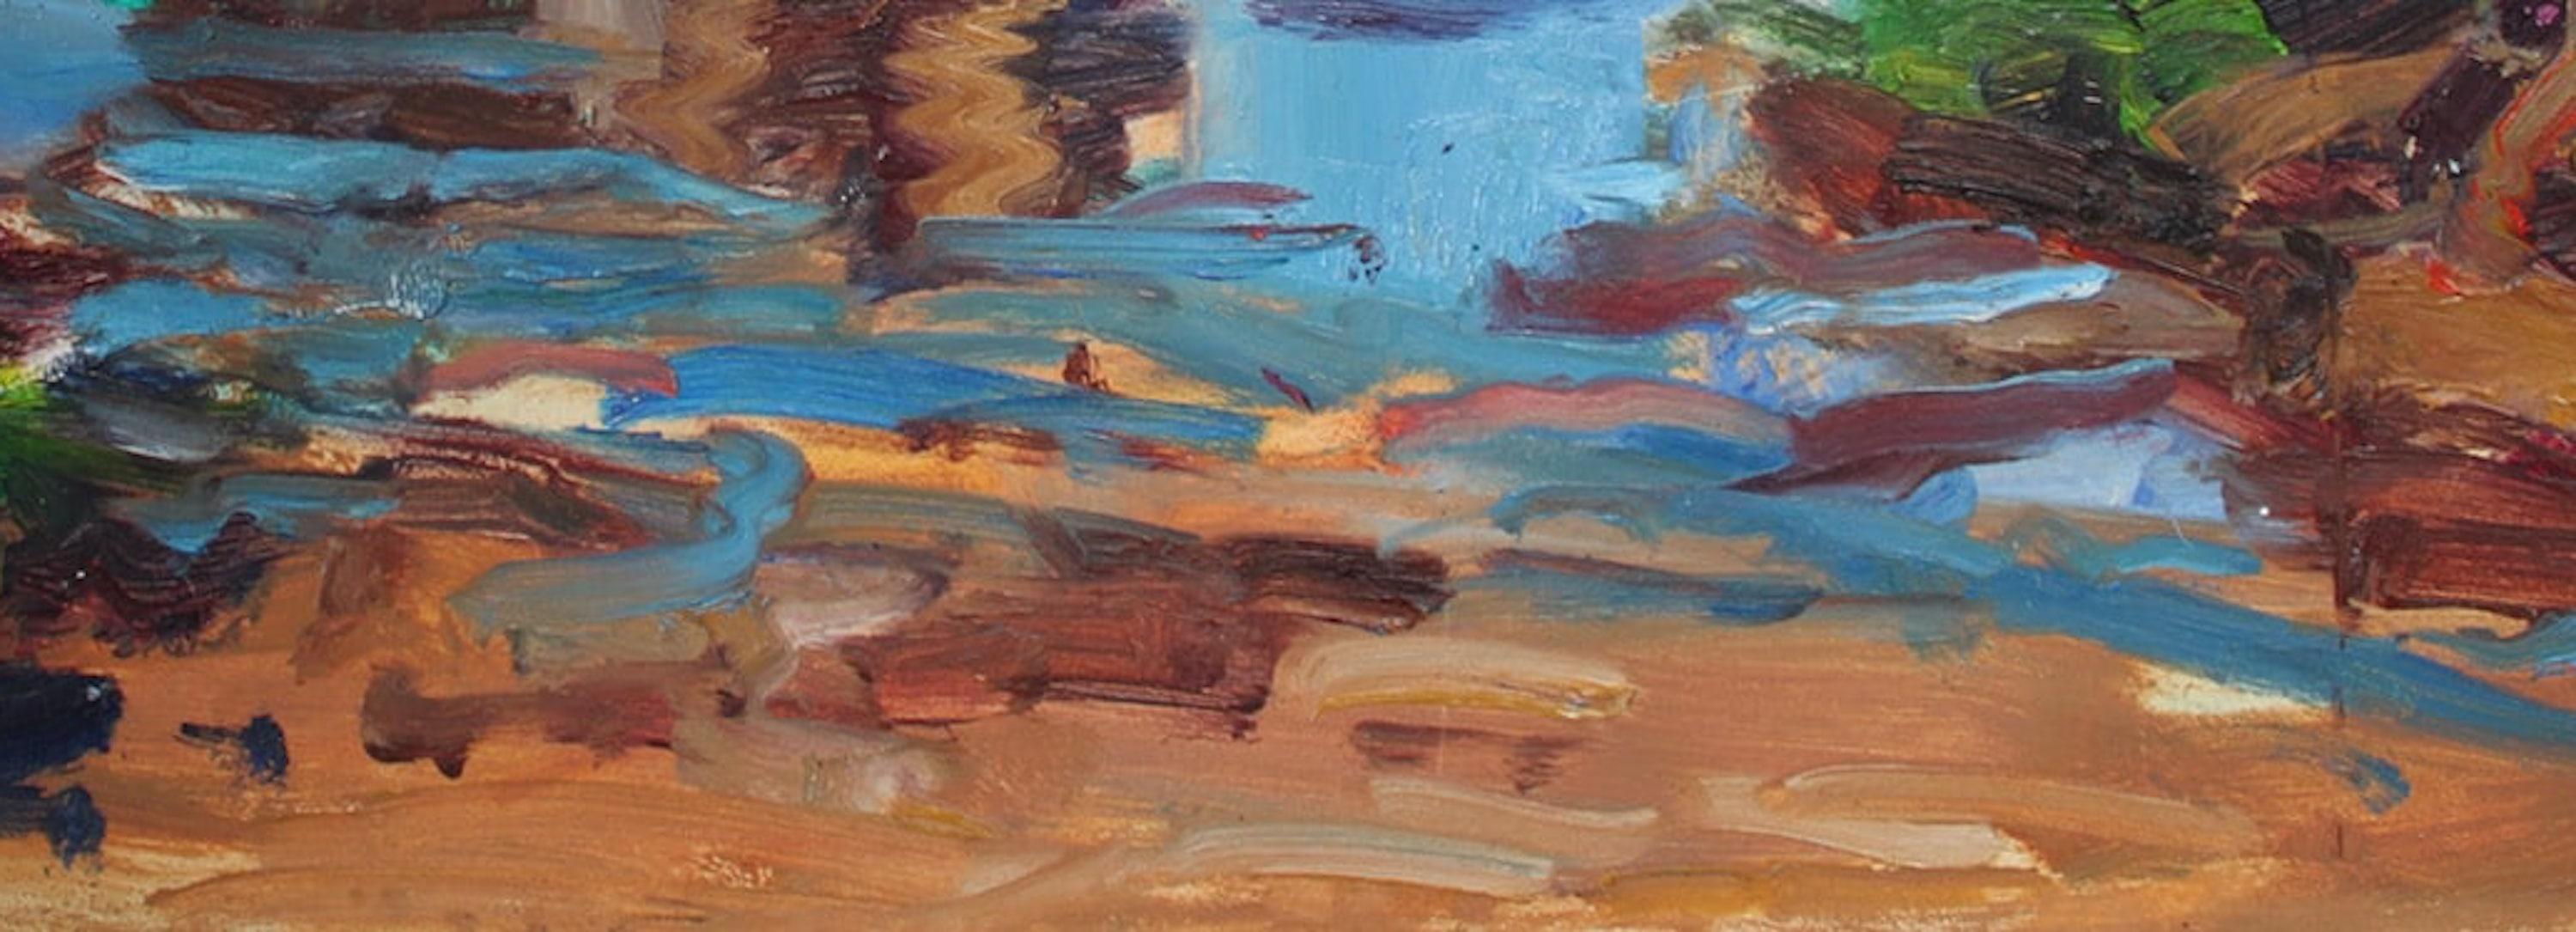 Low Tide Shandwick Bay by Jonathan Shearer - Seascape oil painting, ocean waves For Sale 4